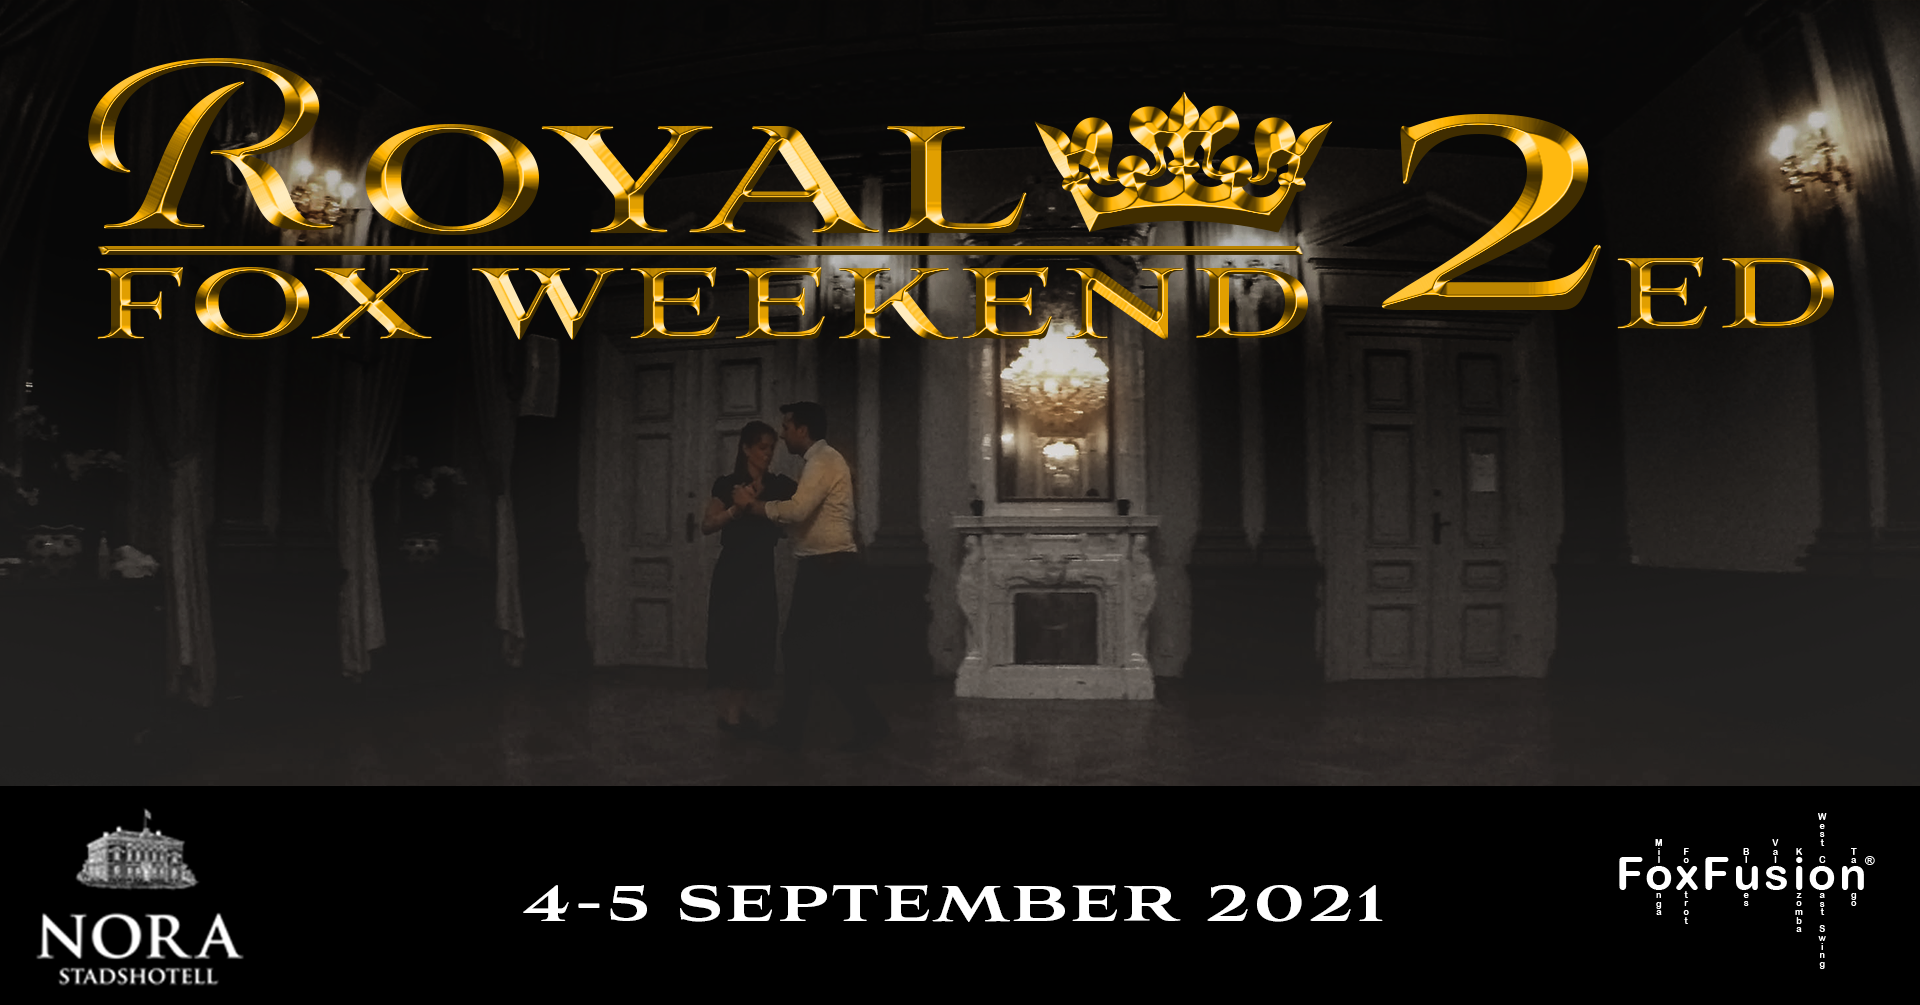 Royal Fox Weekend